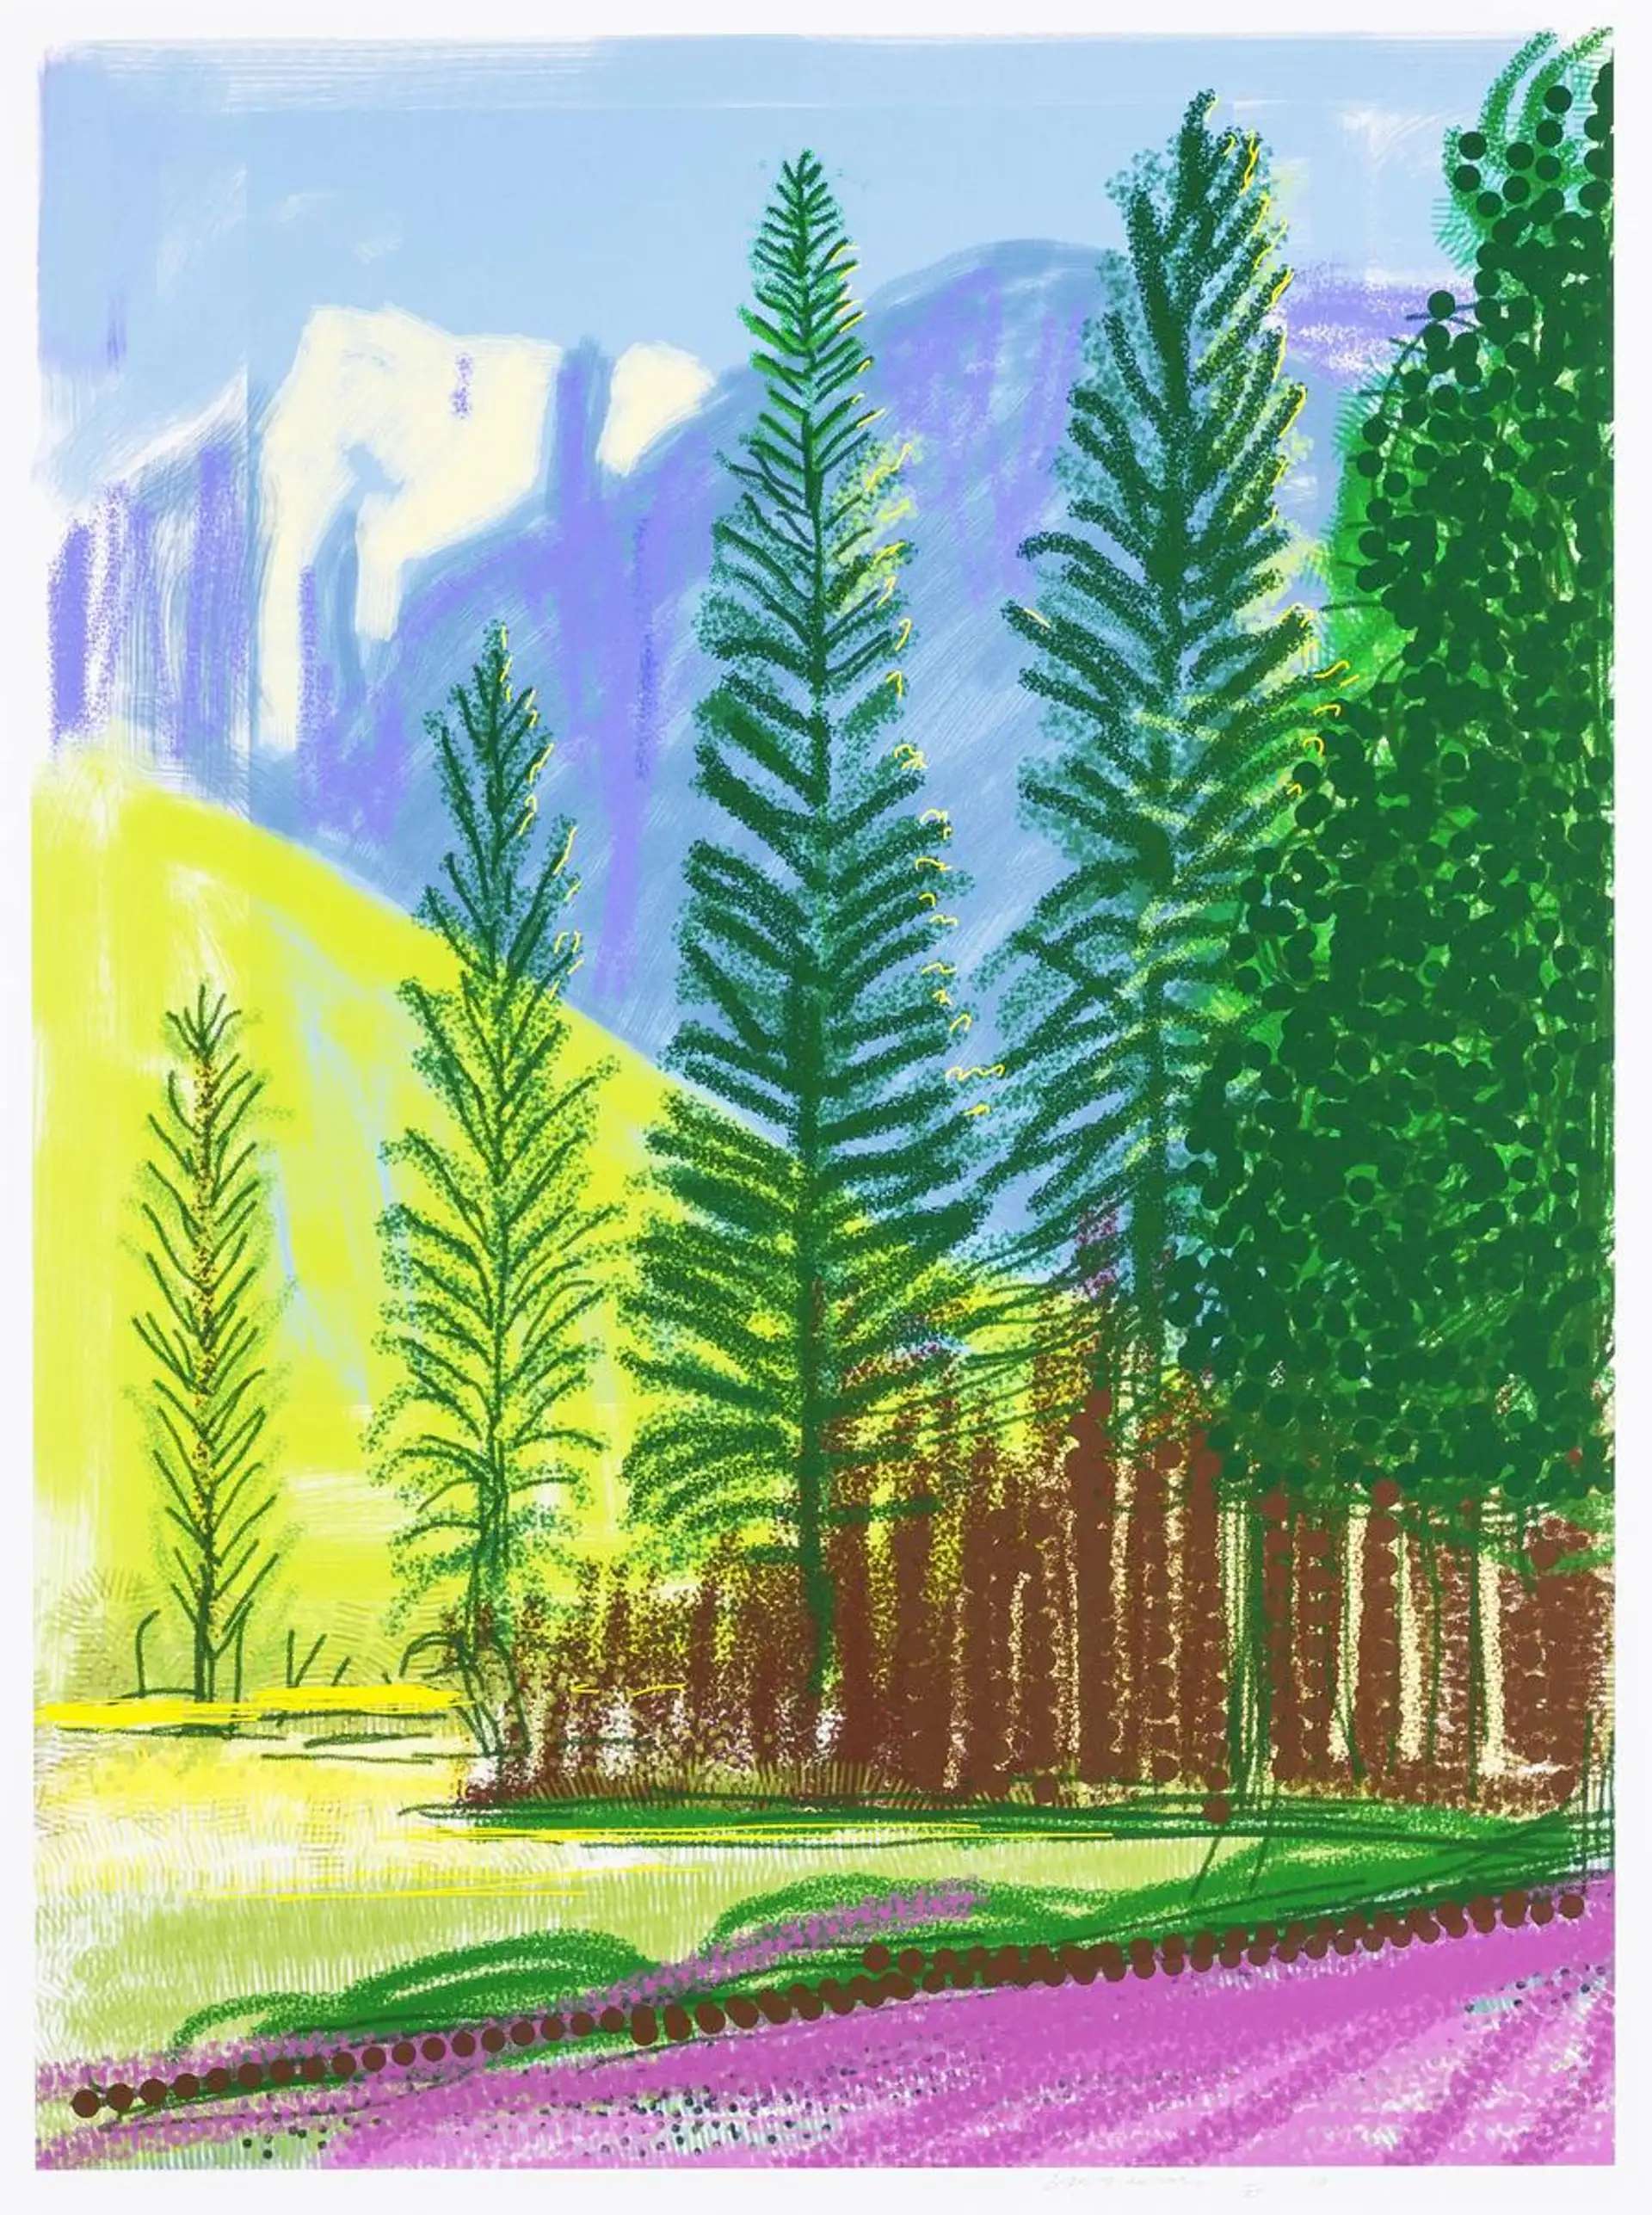 The Yosemite Suite 12 by David Hockney